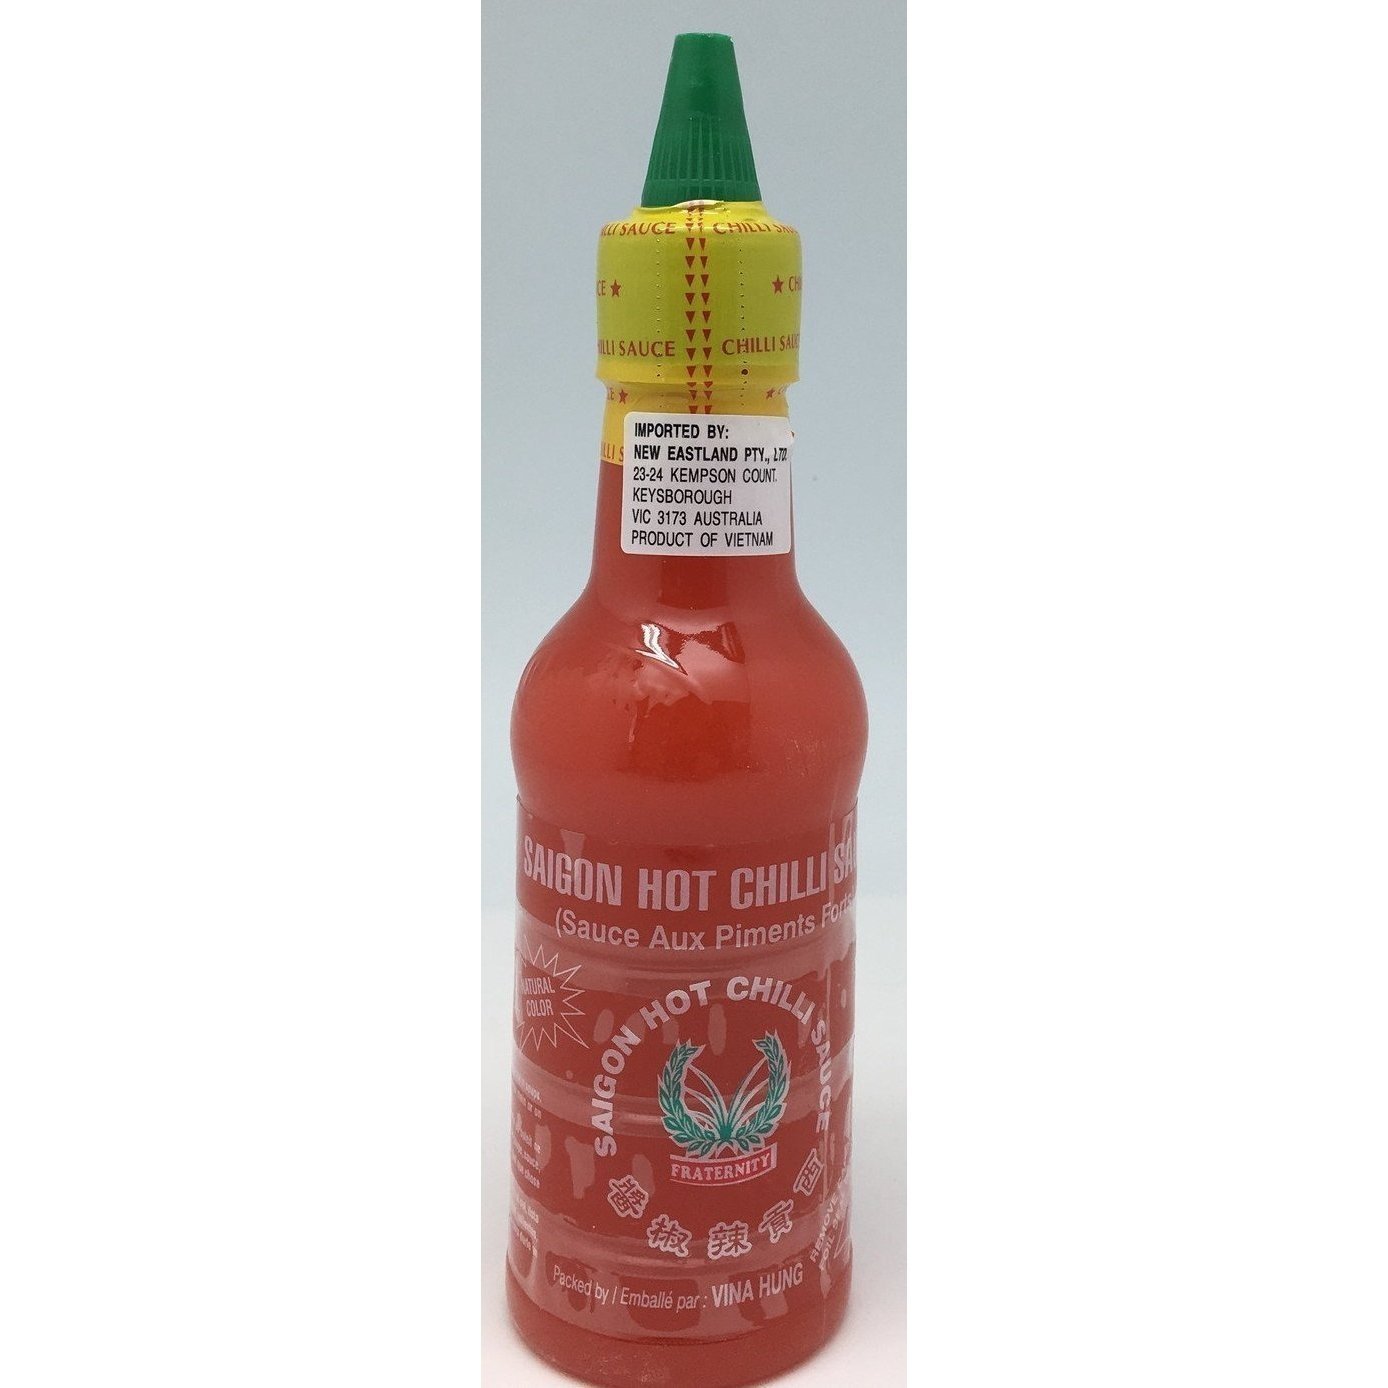 S085SS Fraternity Brand - Saigon Hot Chilli Sauce 250g -  24 bot / 1ctn - New Eastland Pty Ltd - Asian food wholesalers